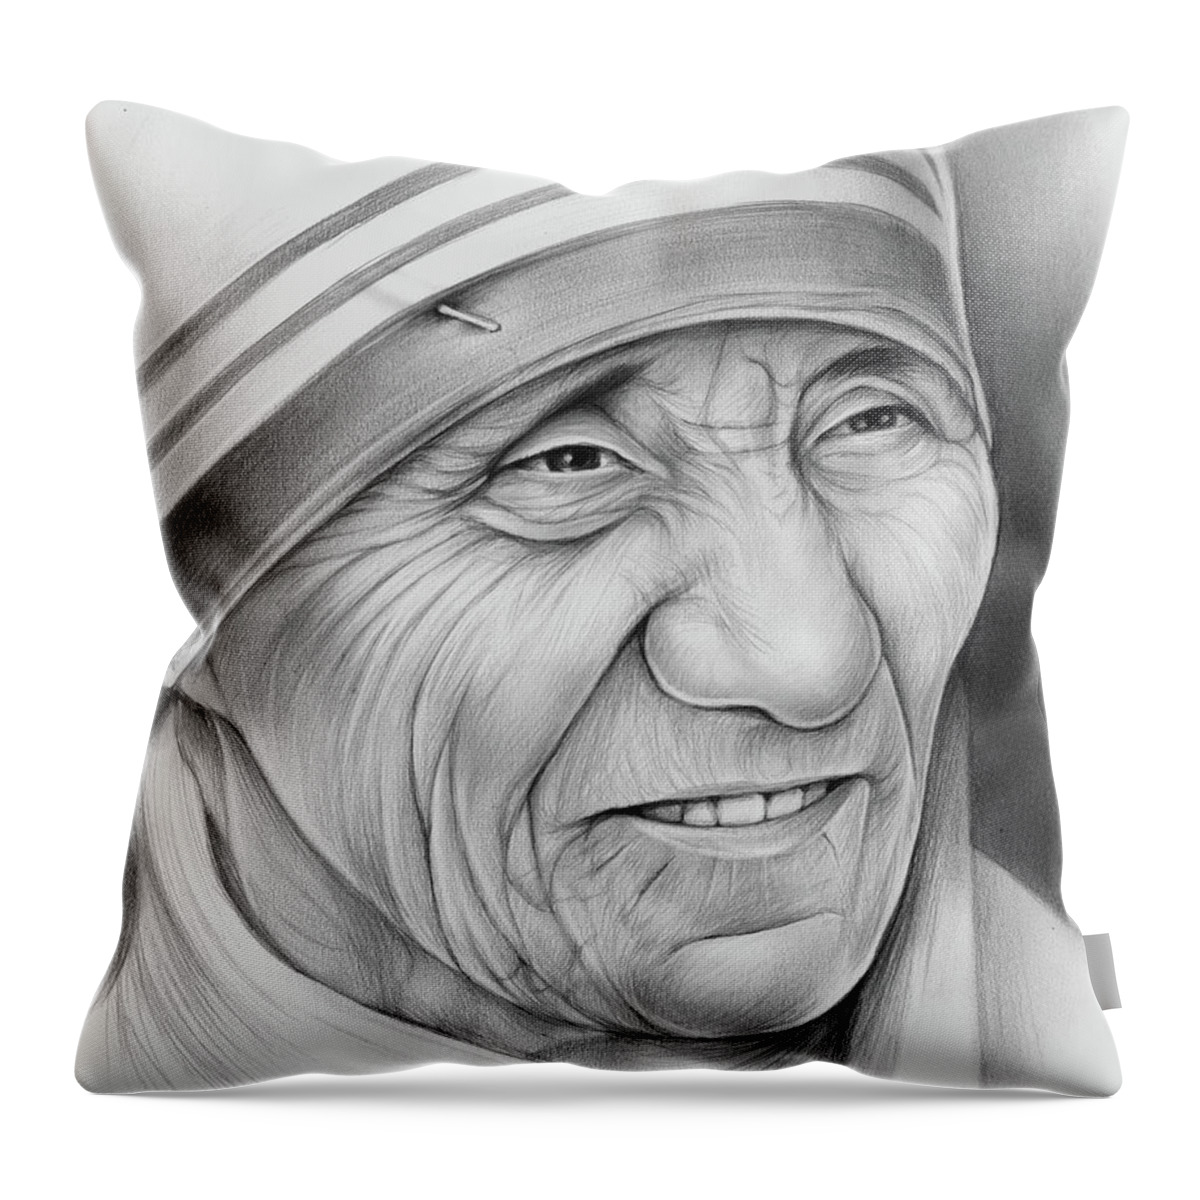 Mother Teresa Throw Pillow featuring the drawing Mother Teresa by Greg Joens